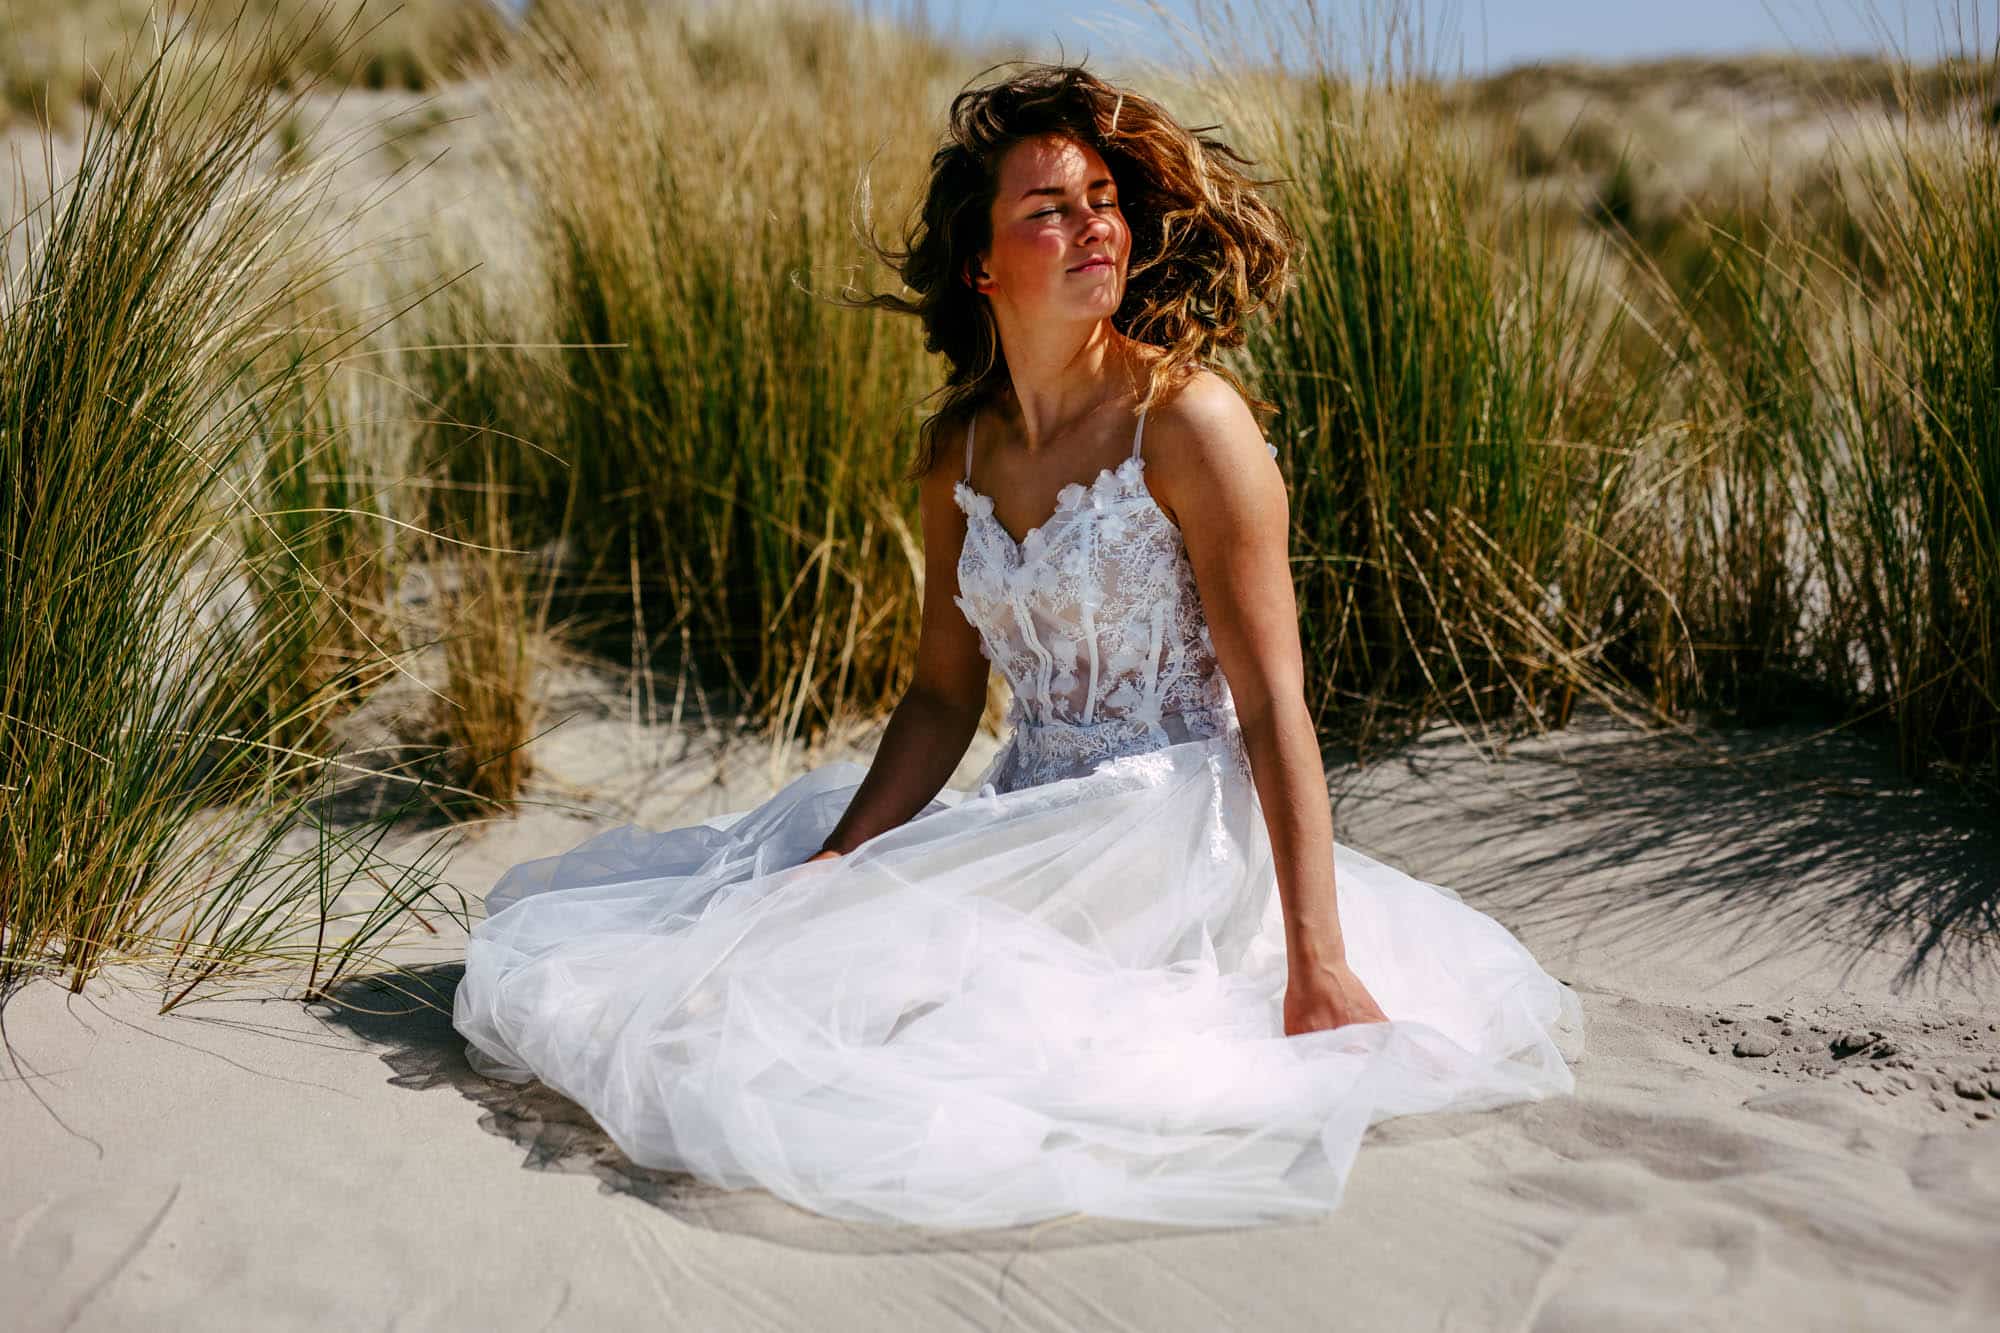 Girl with Boho wedding dress sitting on the beach